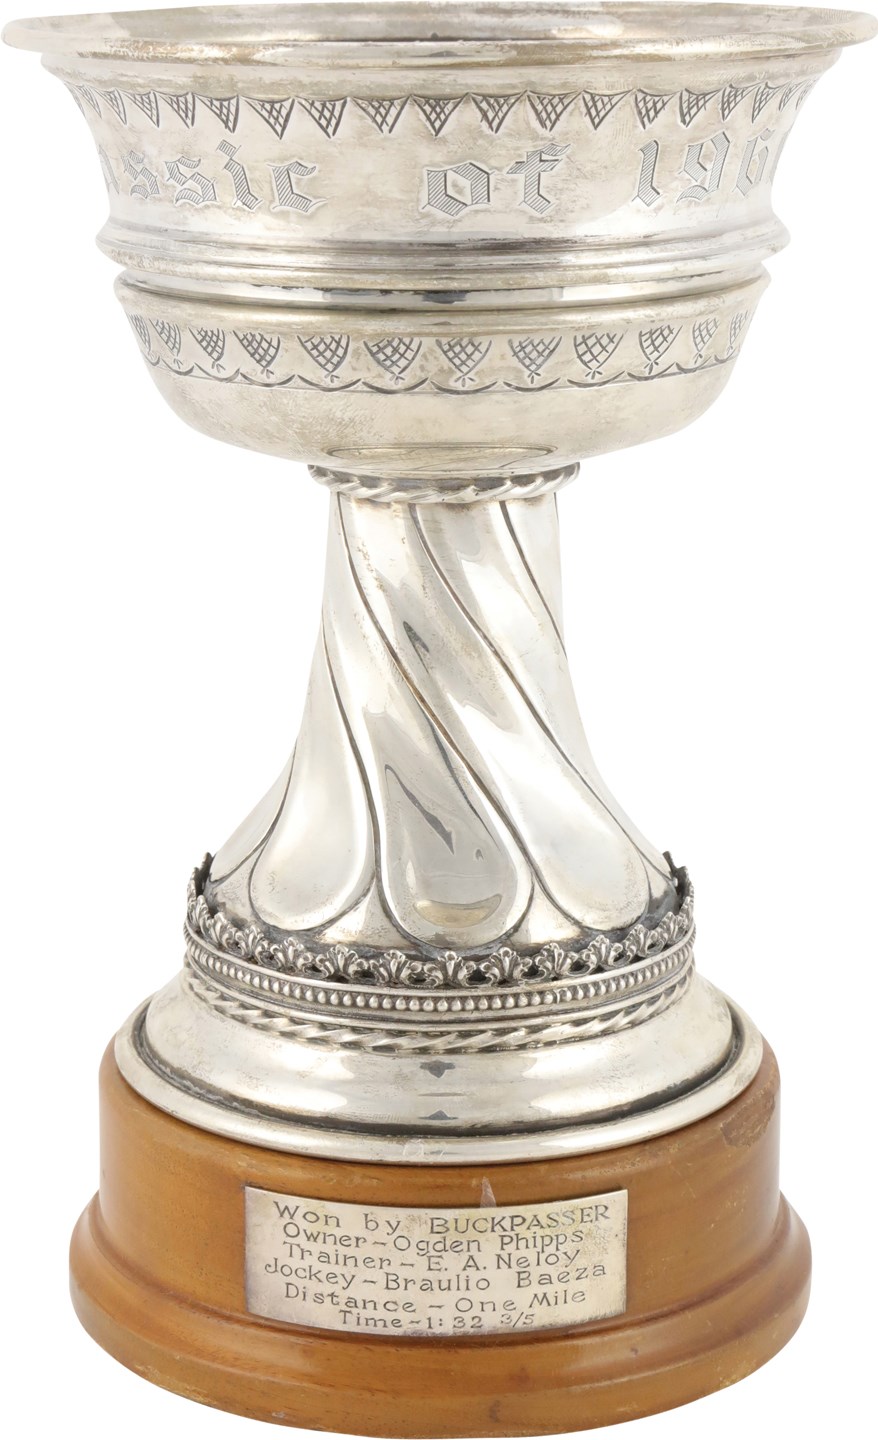 - "Buckpasser" 1966 Arlington Classic "World Record" Silver Trophy